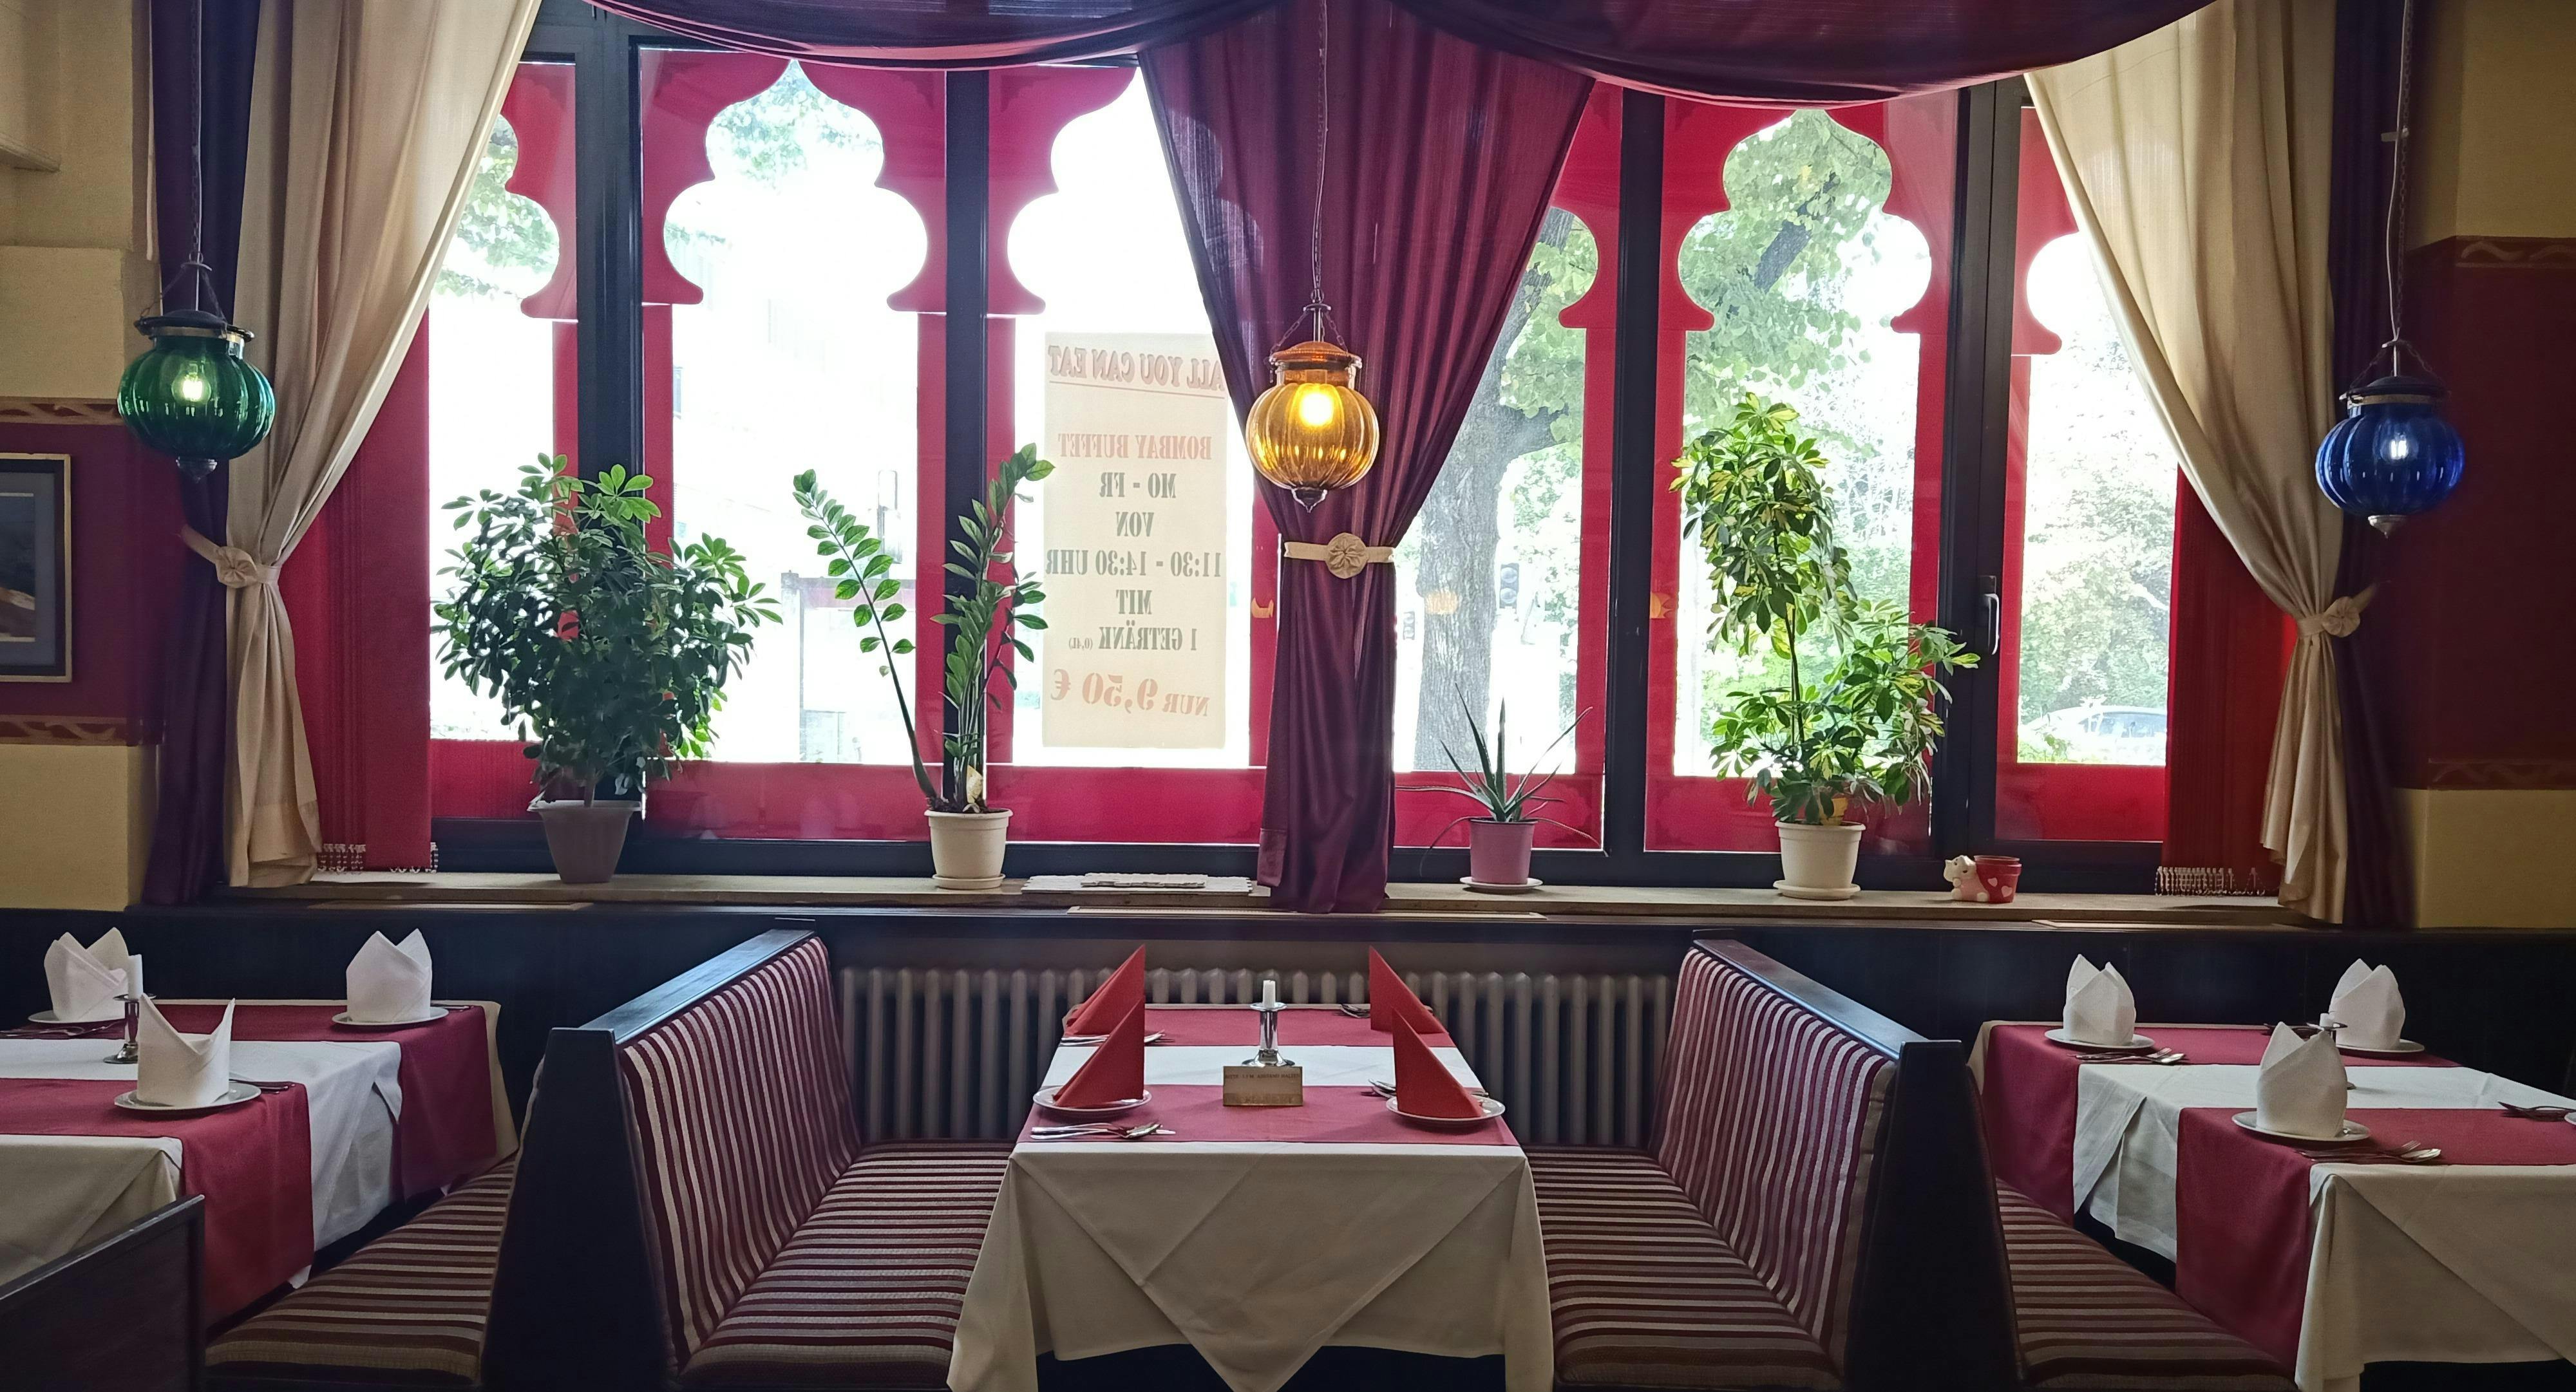 Photo of restaurant Bombay Palace in Haidhausen, Munich